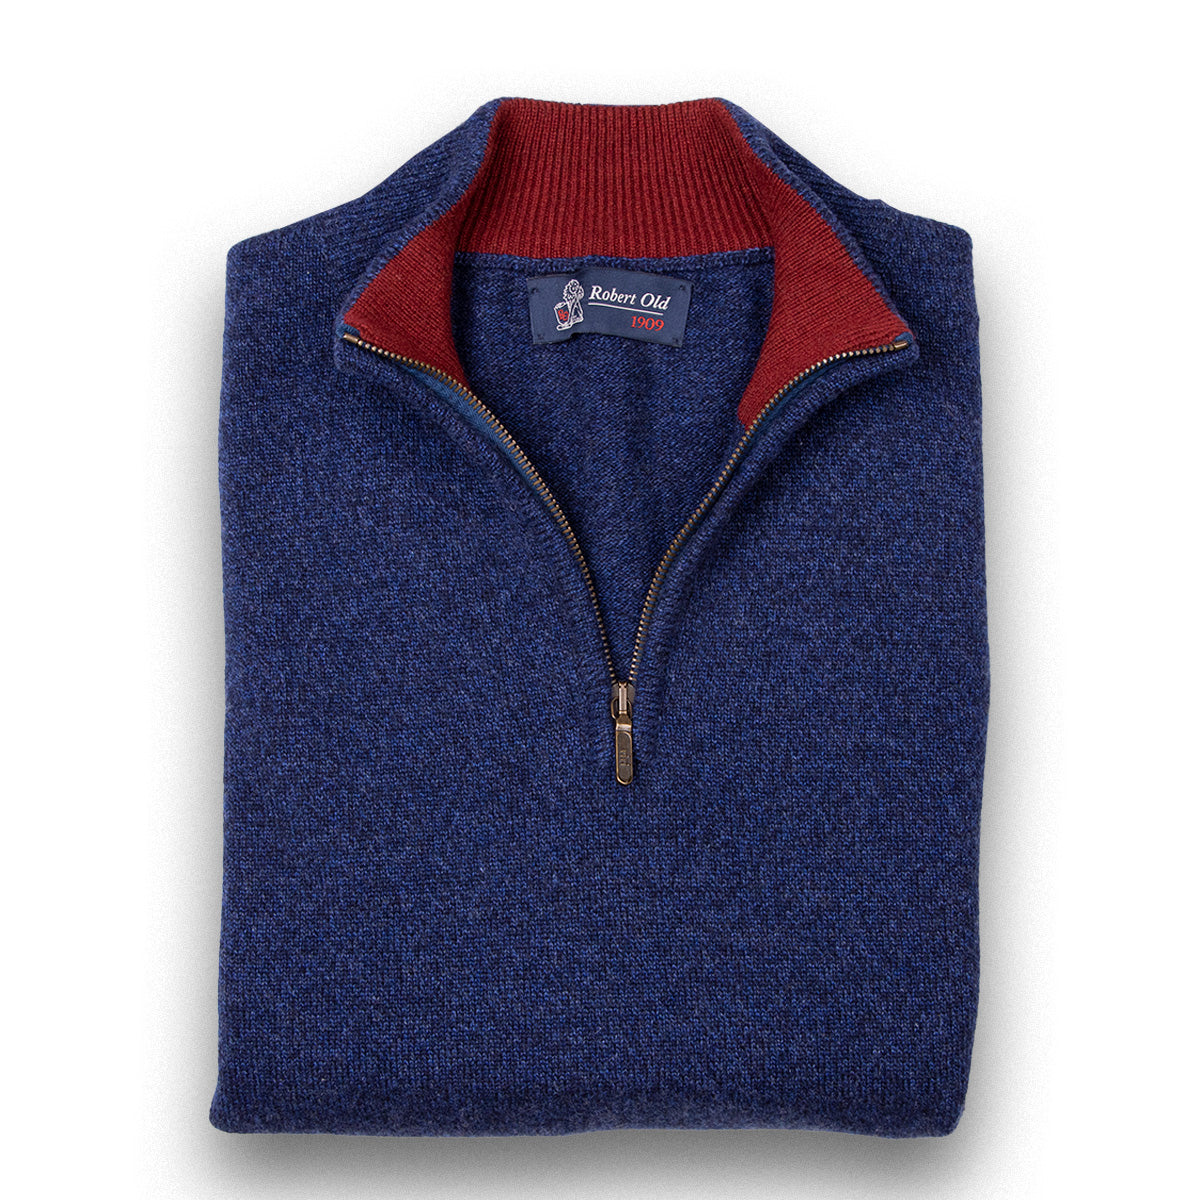 The Bowmore 1/4 Zip Neck Cashmere Sweater - Navy Marl / Russet  Robert Old Navy Marl - Russet UK 48" 